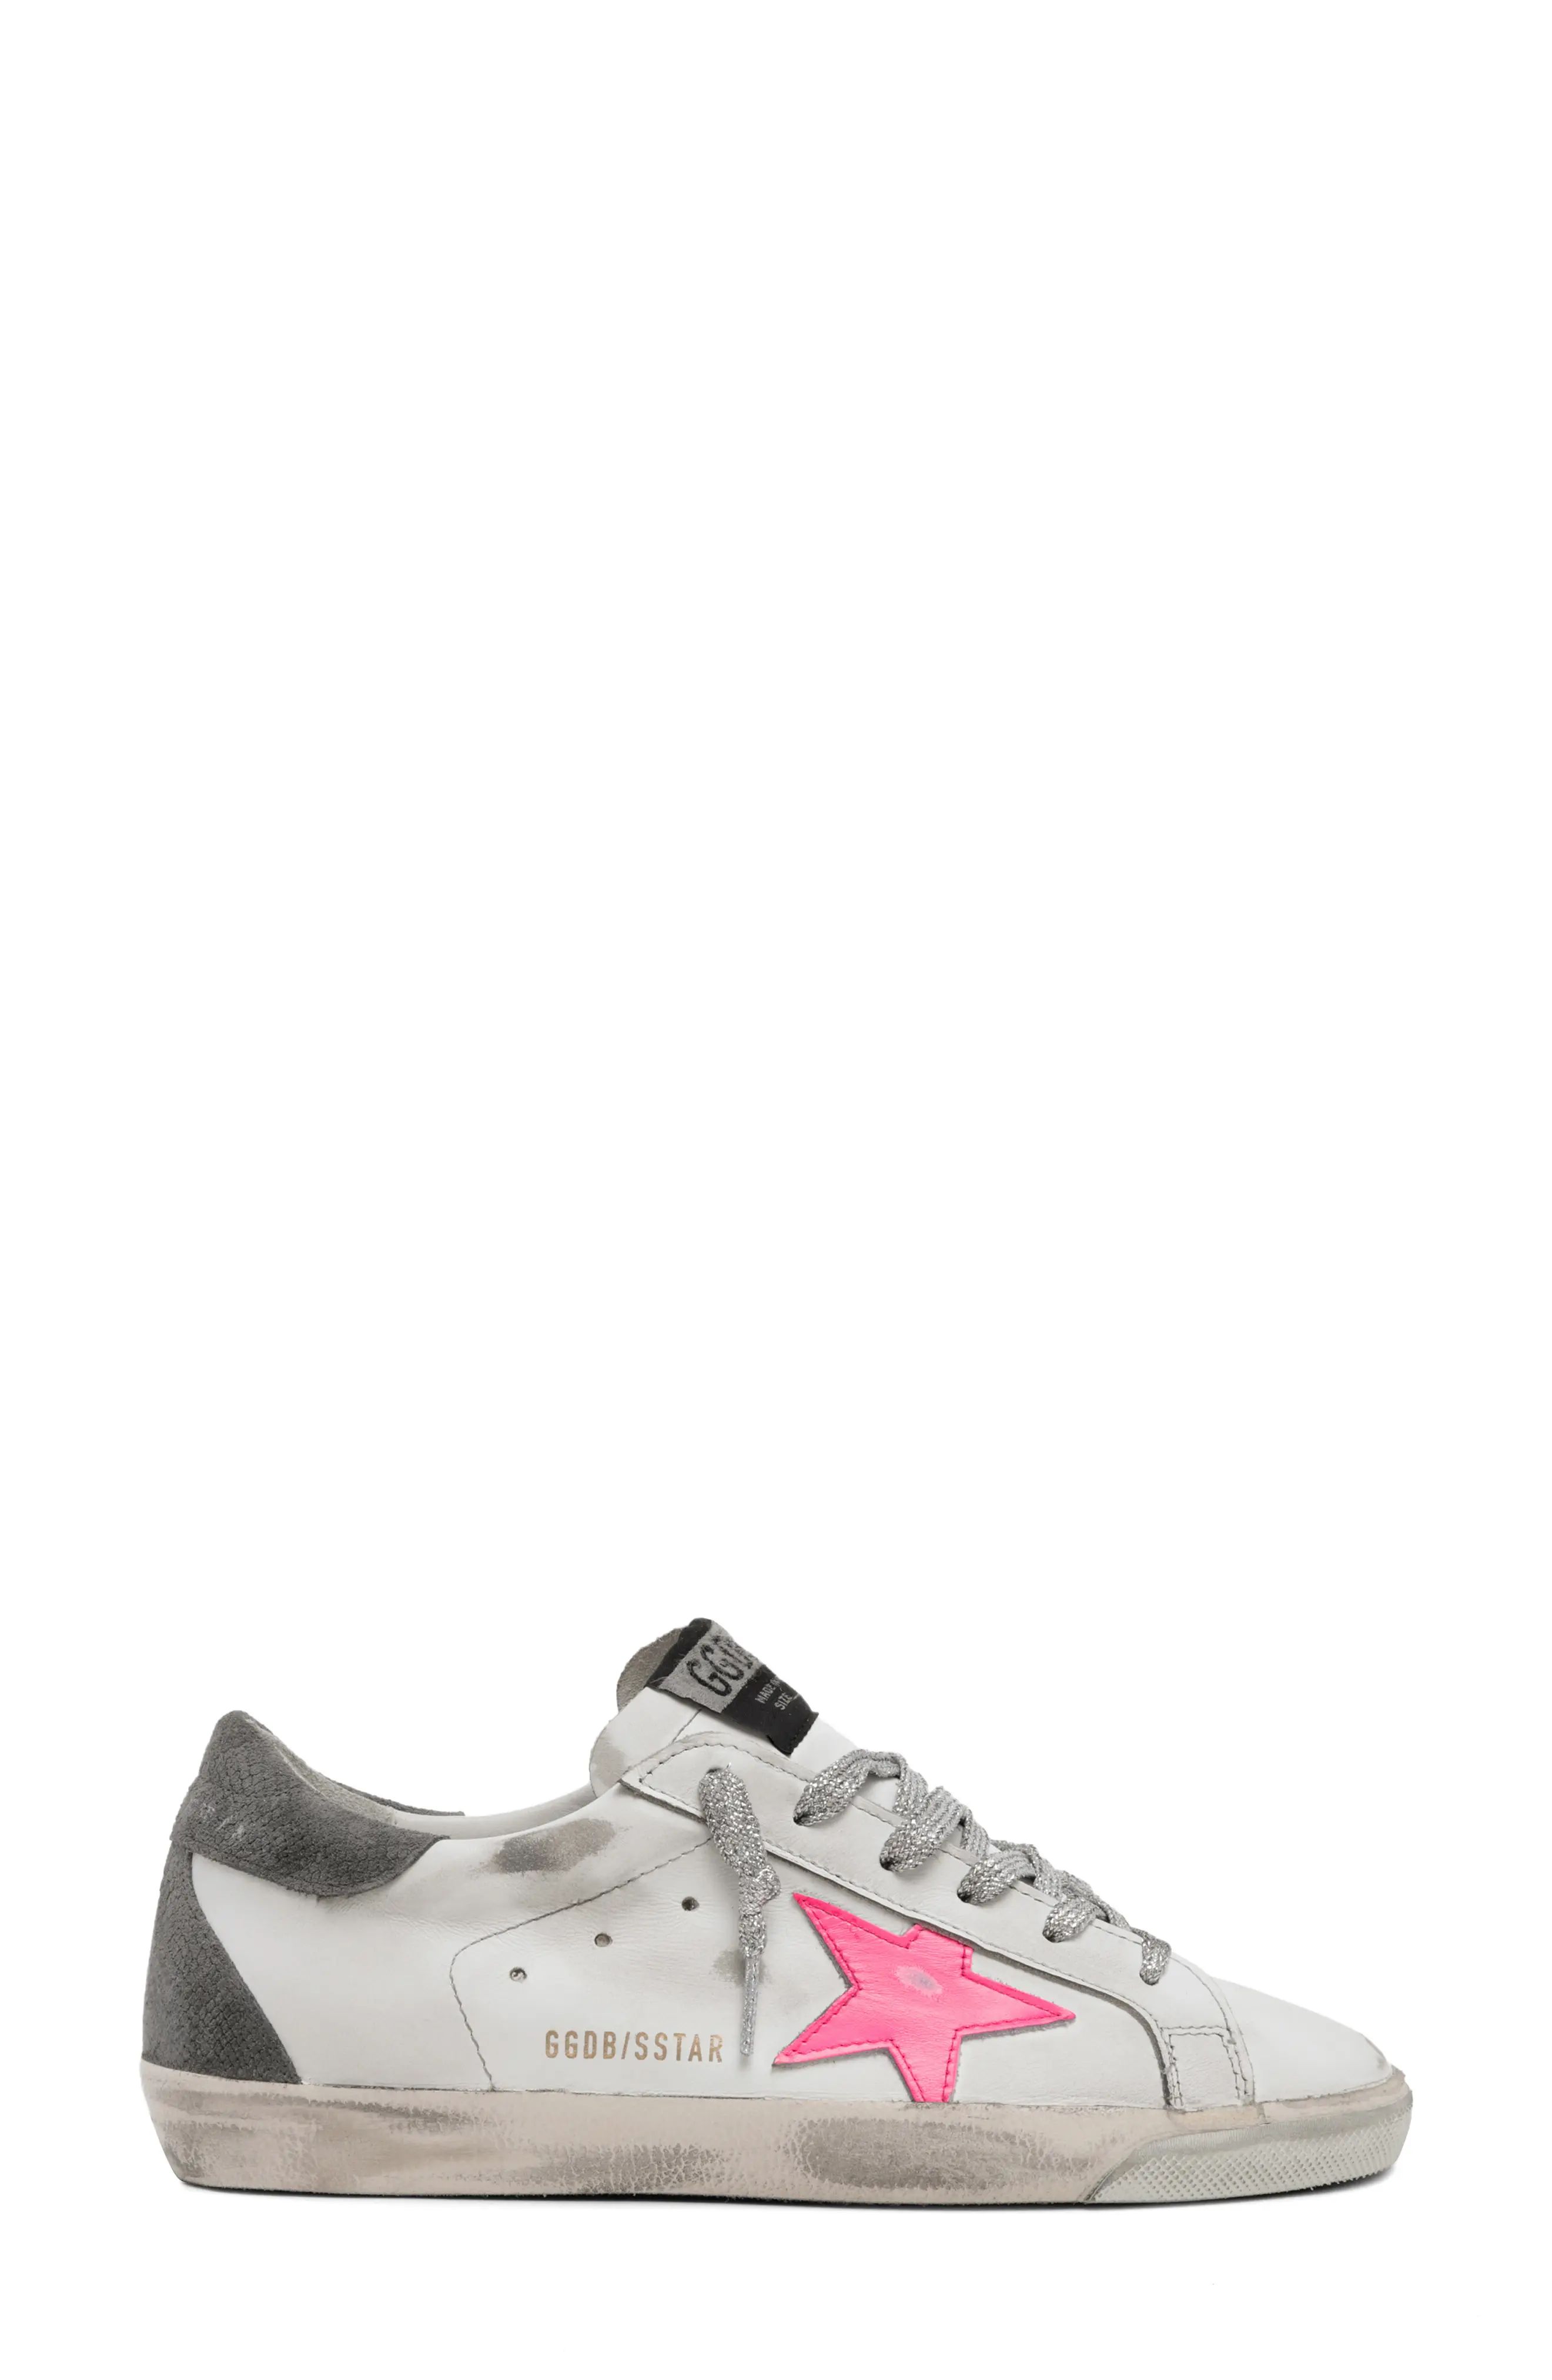 Golden Goose Super-Star Low Top Sneaker in White/Pink/Grey at Nordstrom, Size 8Us | Nordstrom